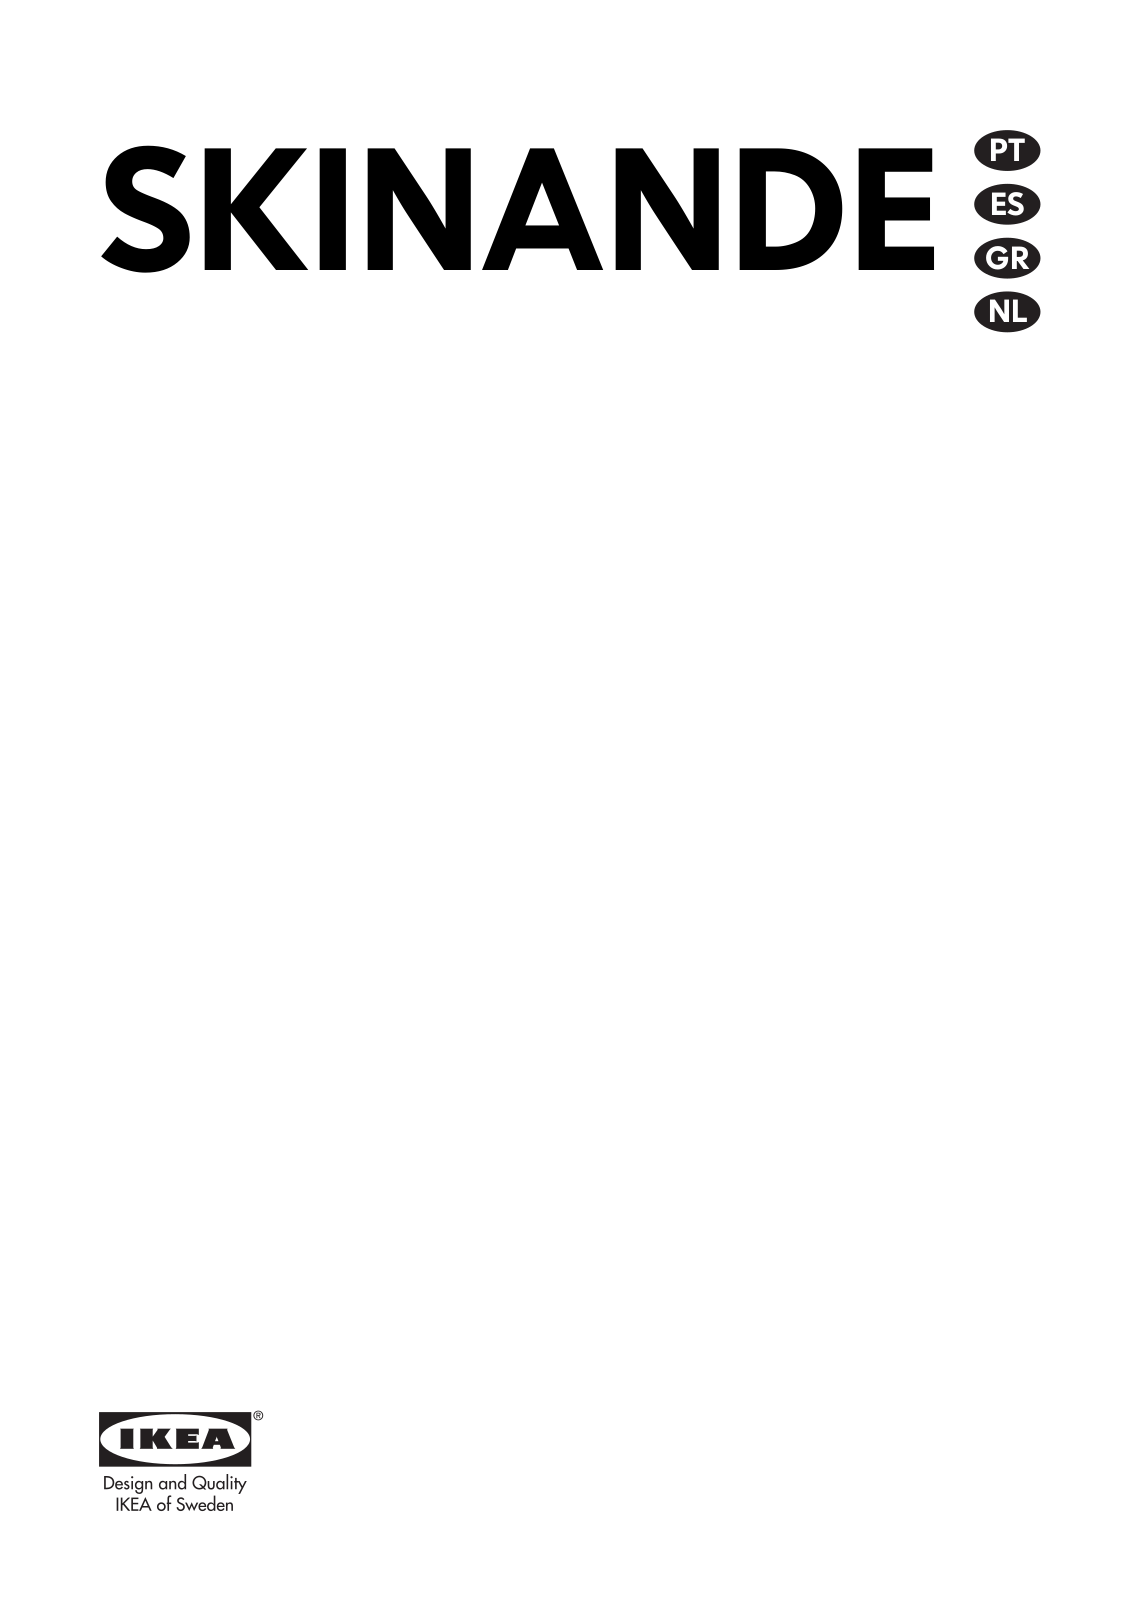 IKEA SKINANDE User Manual